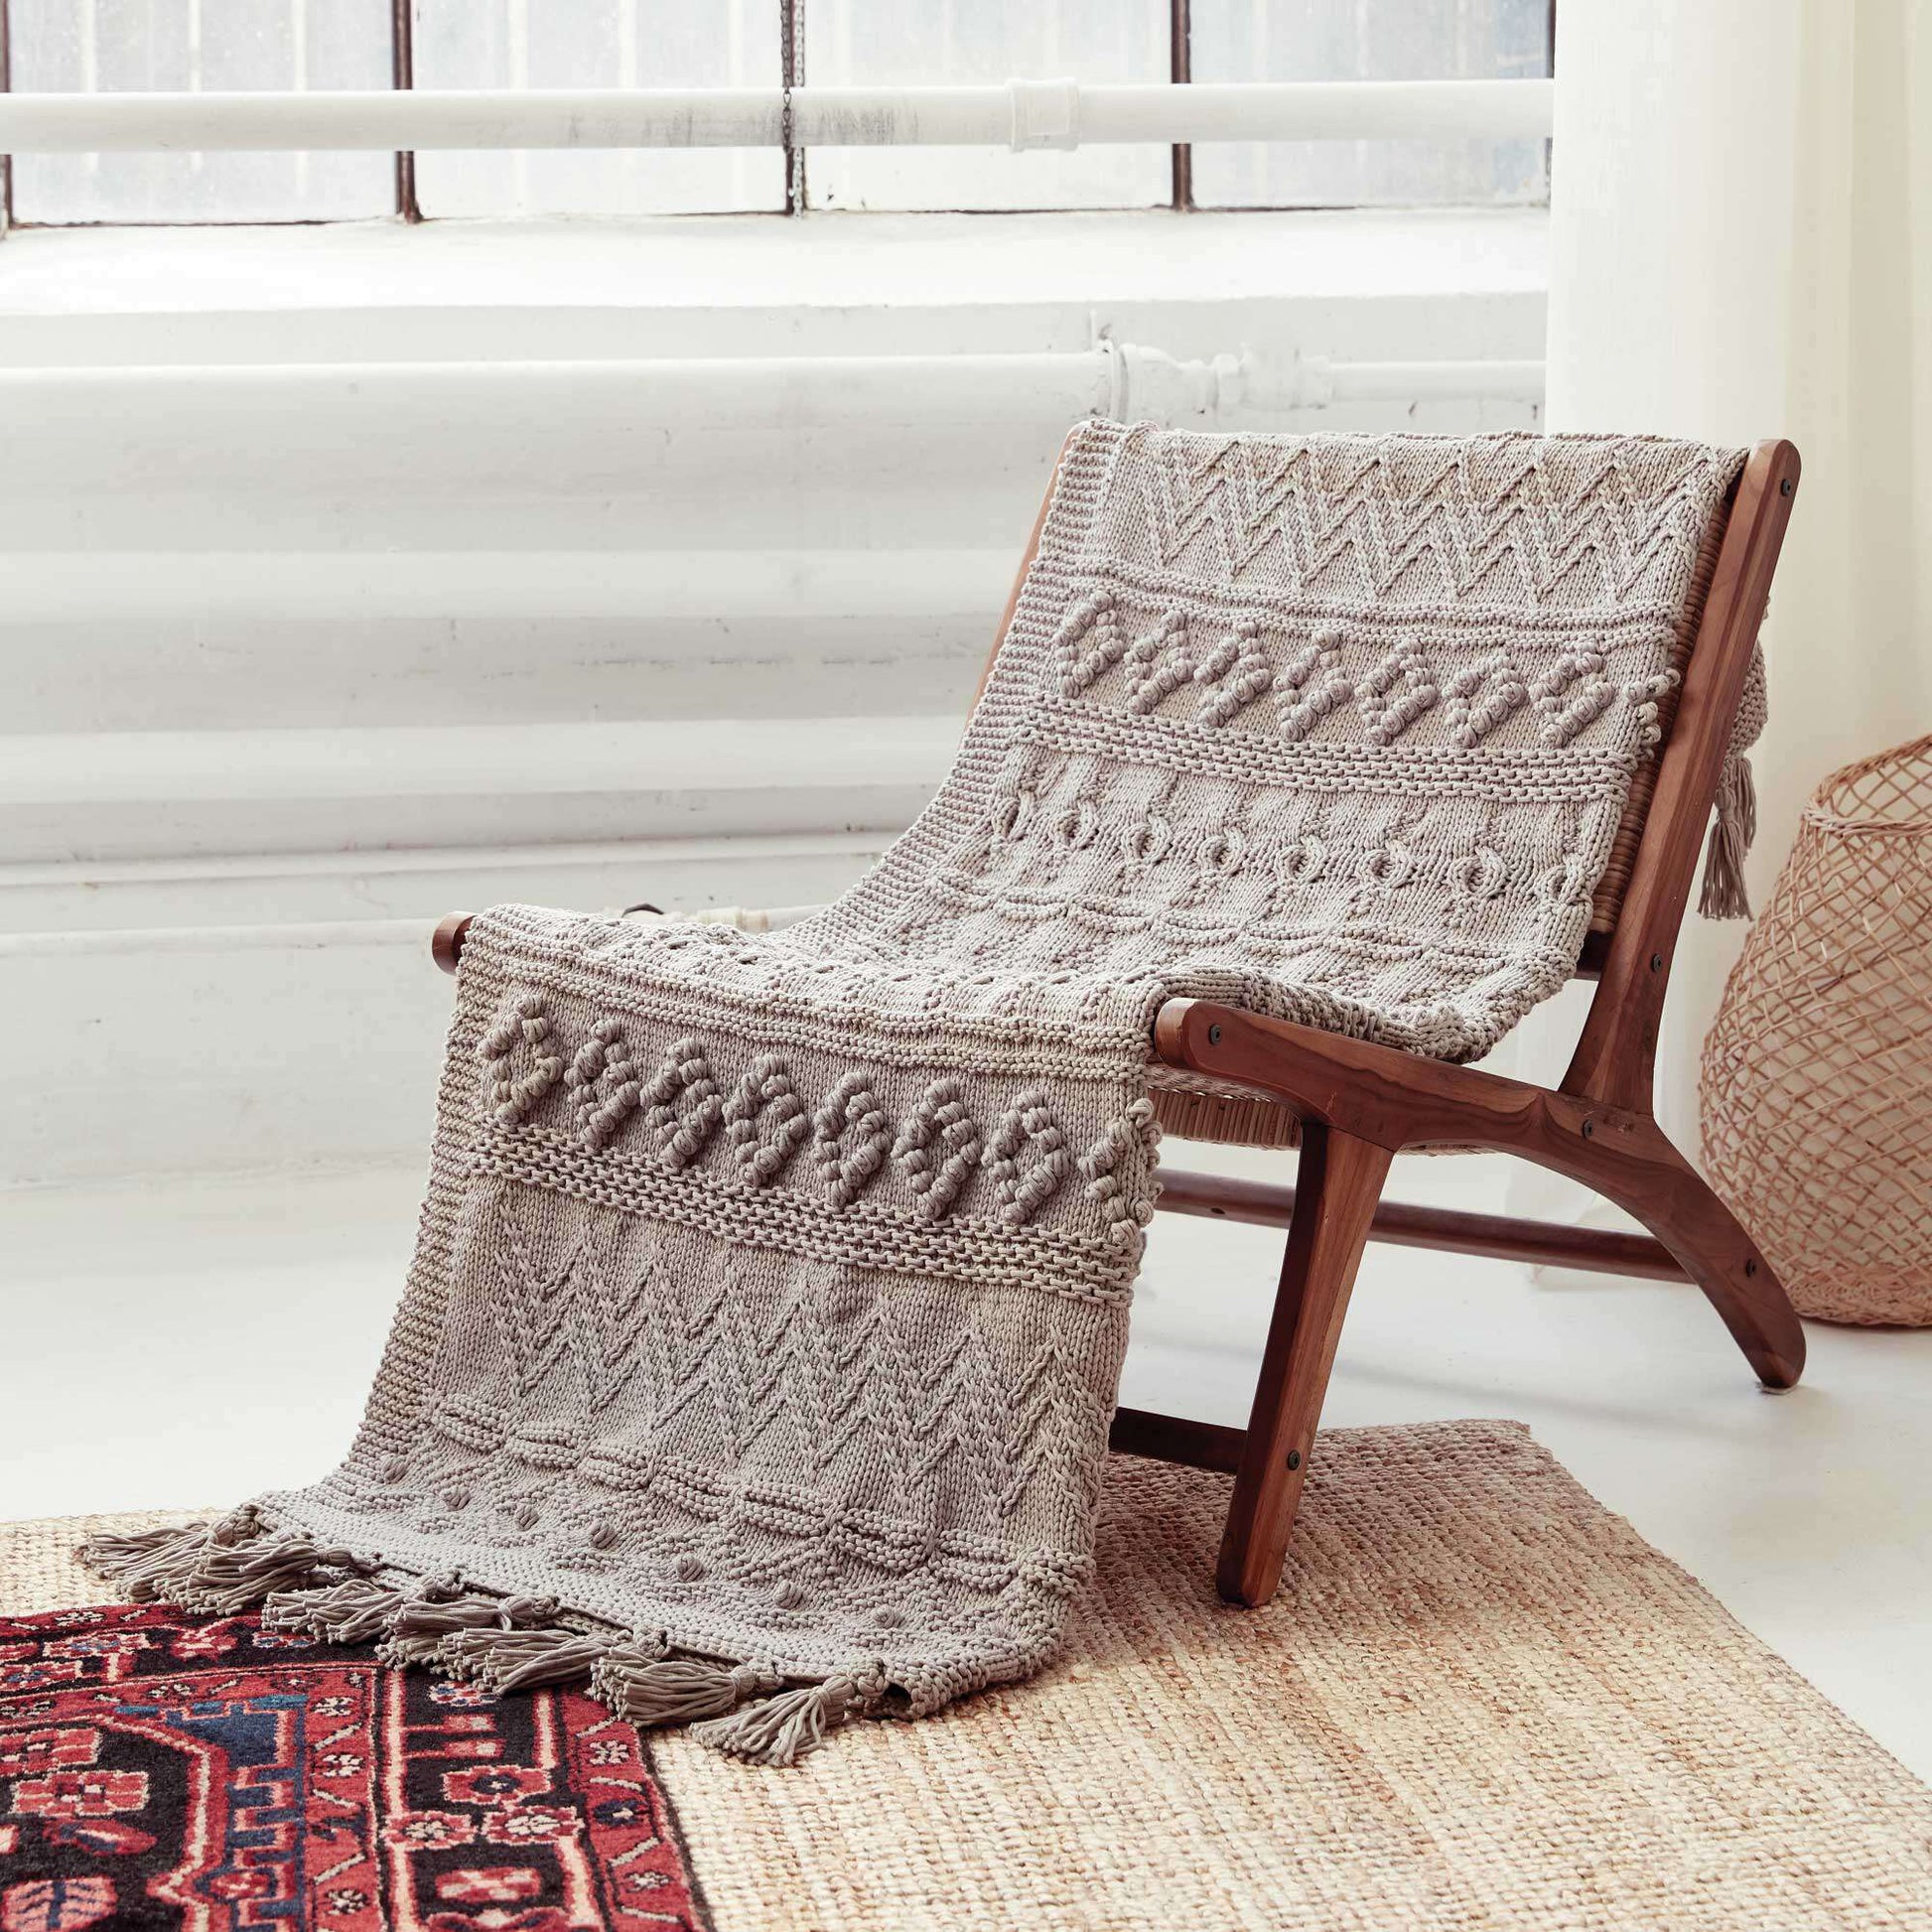 Free Bernat Sampler Knit Blanket Pattern